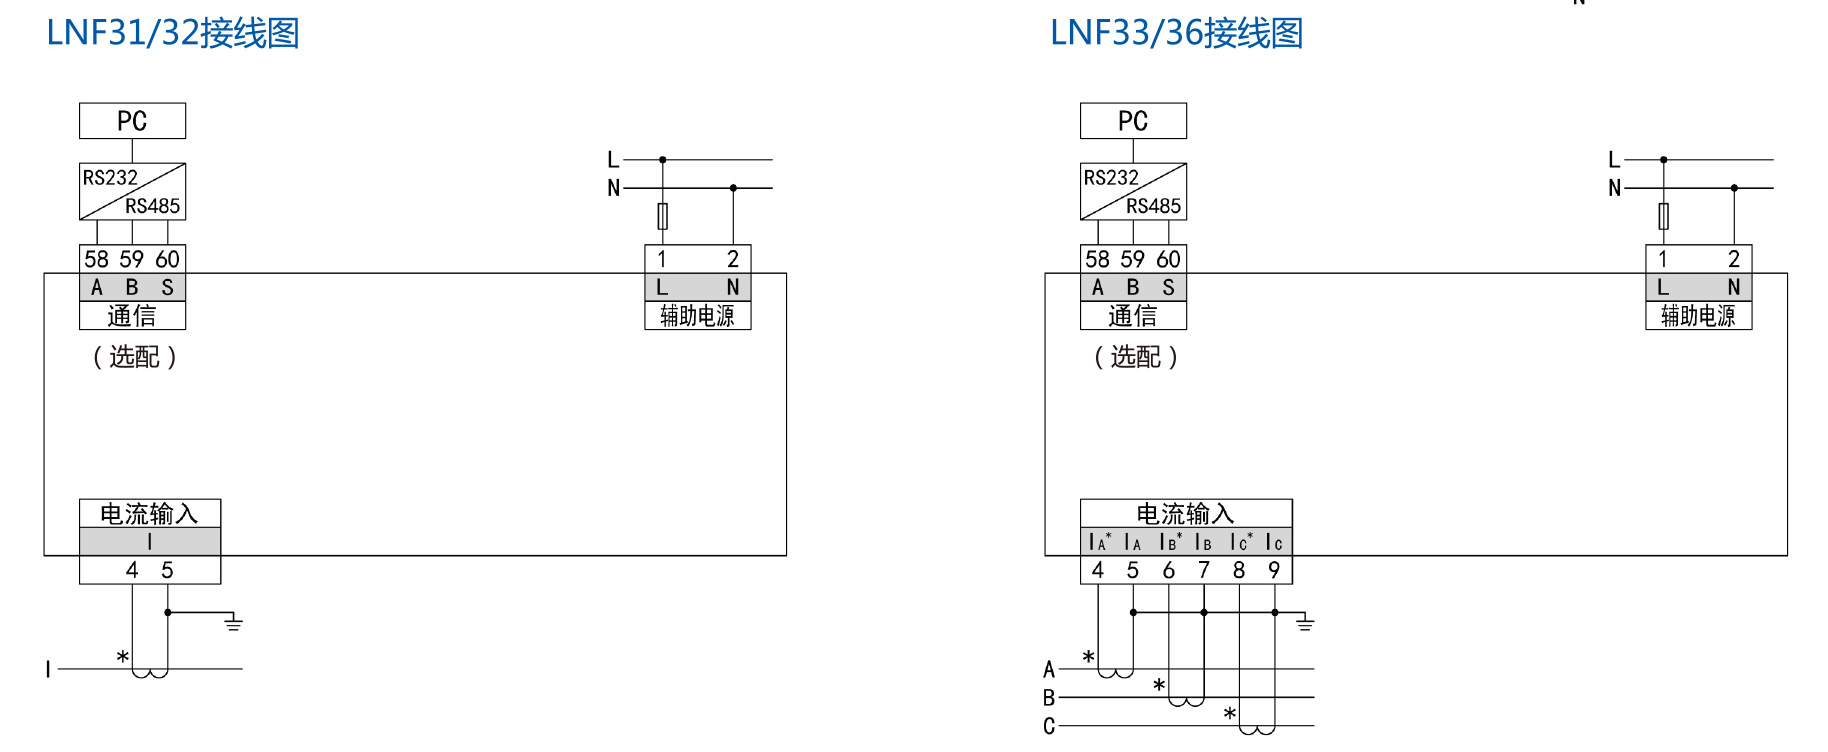 LNF32可选通讯单相电流智能电力仪表领菲品牌江苏斯菲尔直销 领菲,斯菲尔,单相电流,智能电力仪表,厂家直销